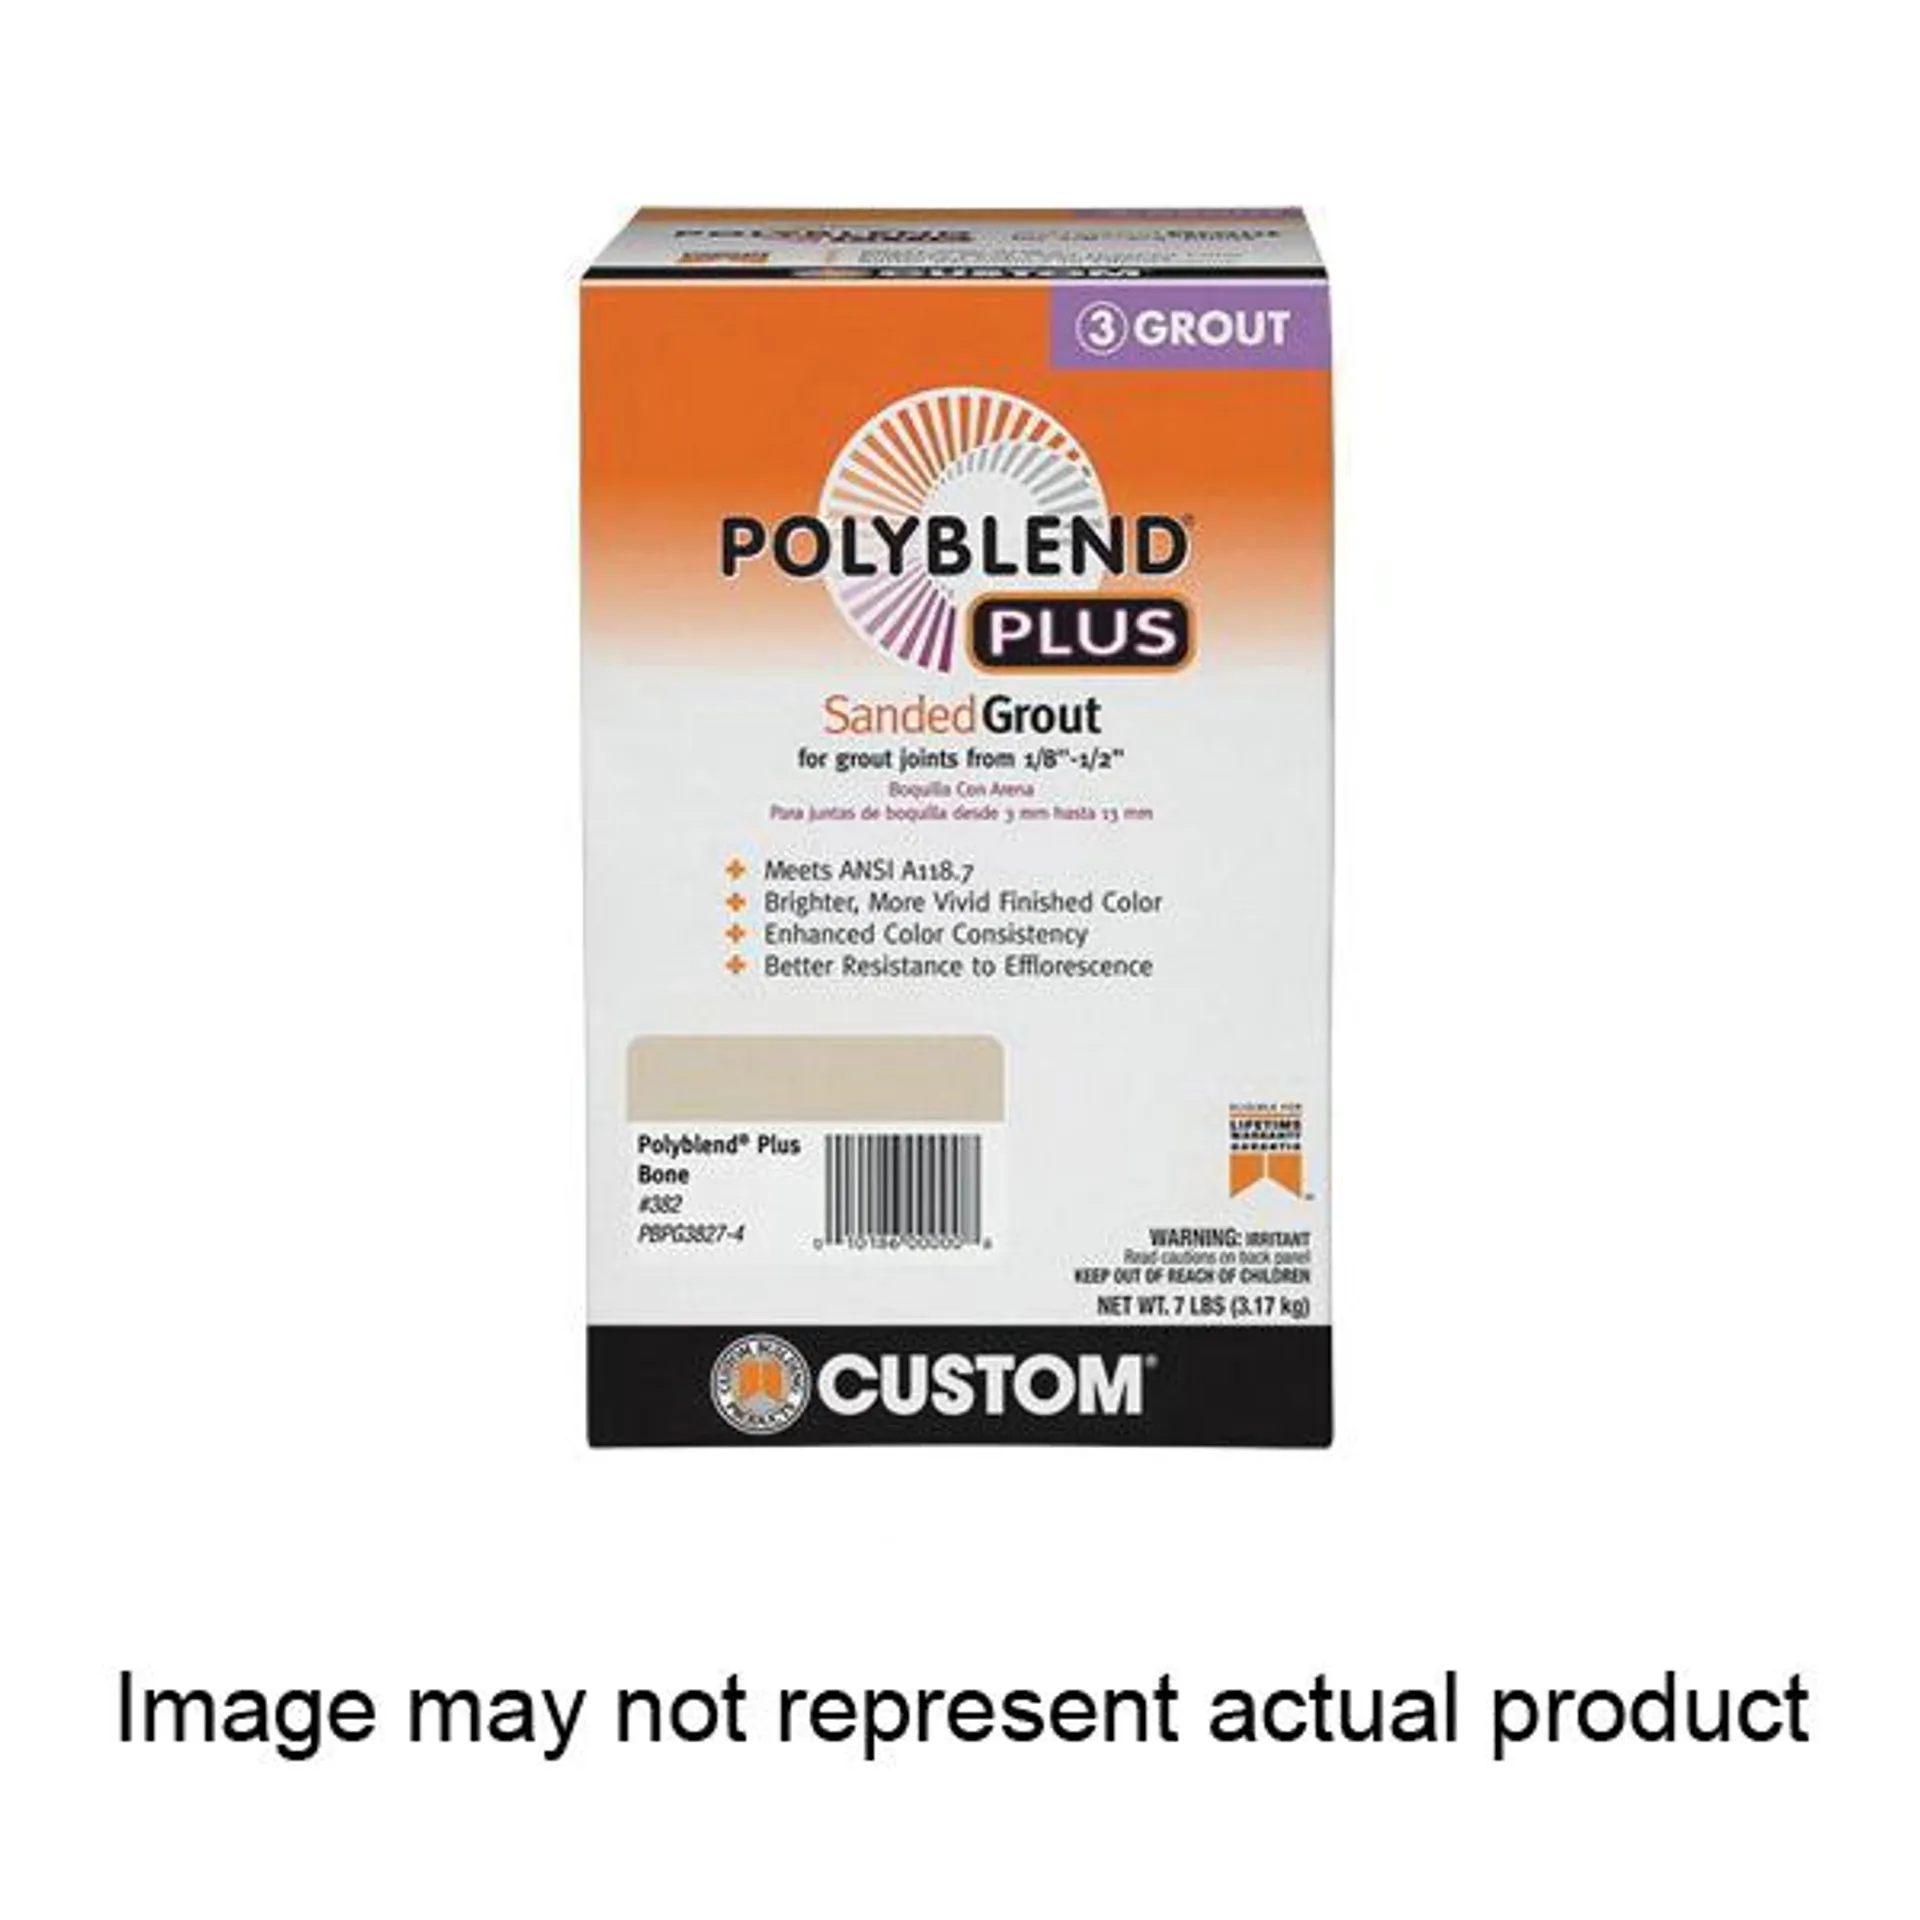 Custom Polyblend Plus PBPG1657-4 Sanded Grout, Delorean Gray, 7 lb Box